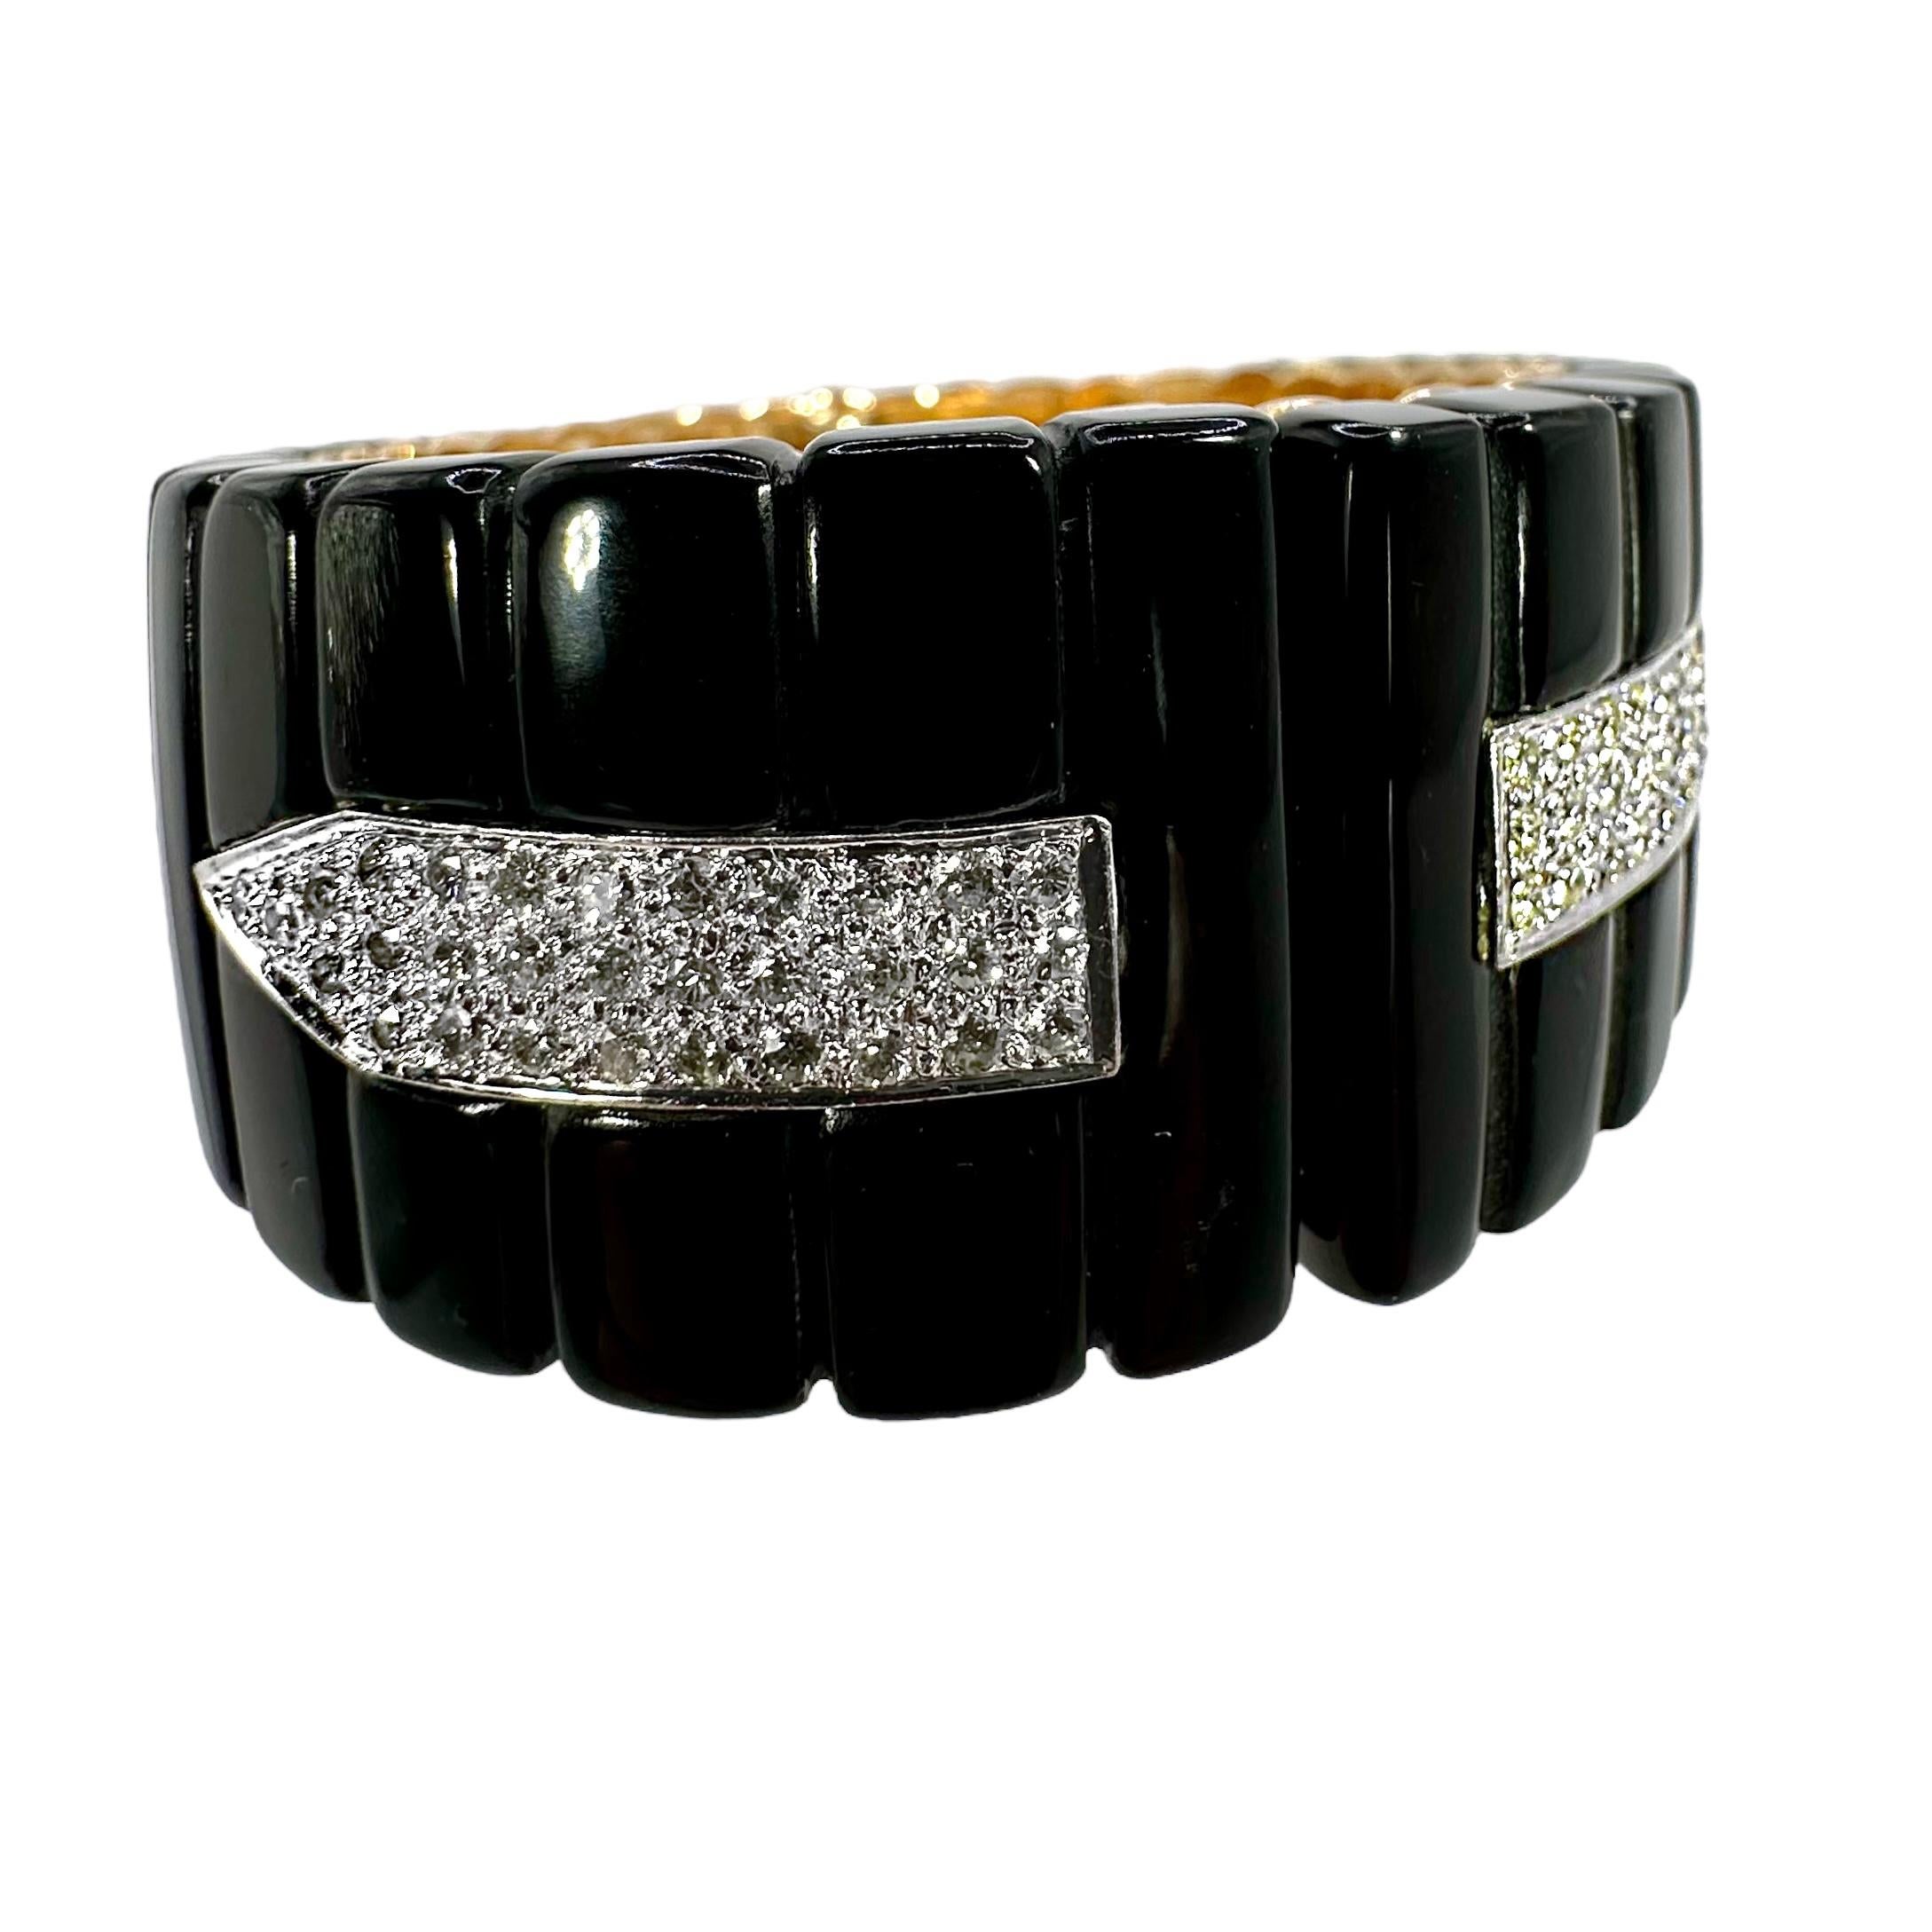 Bold & Stylish Late-20th Century Gold, Onyx & Diamond Cuff Bracelet 1 Inch Wide For Sale 3